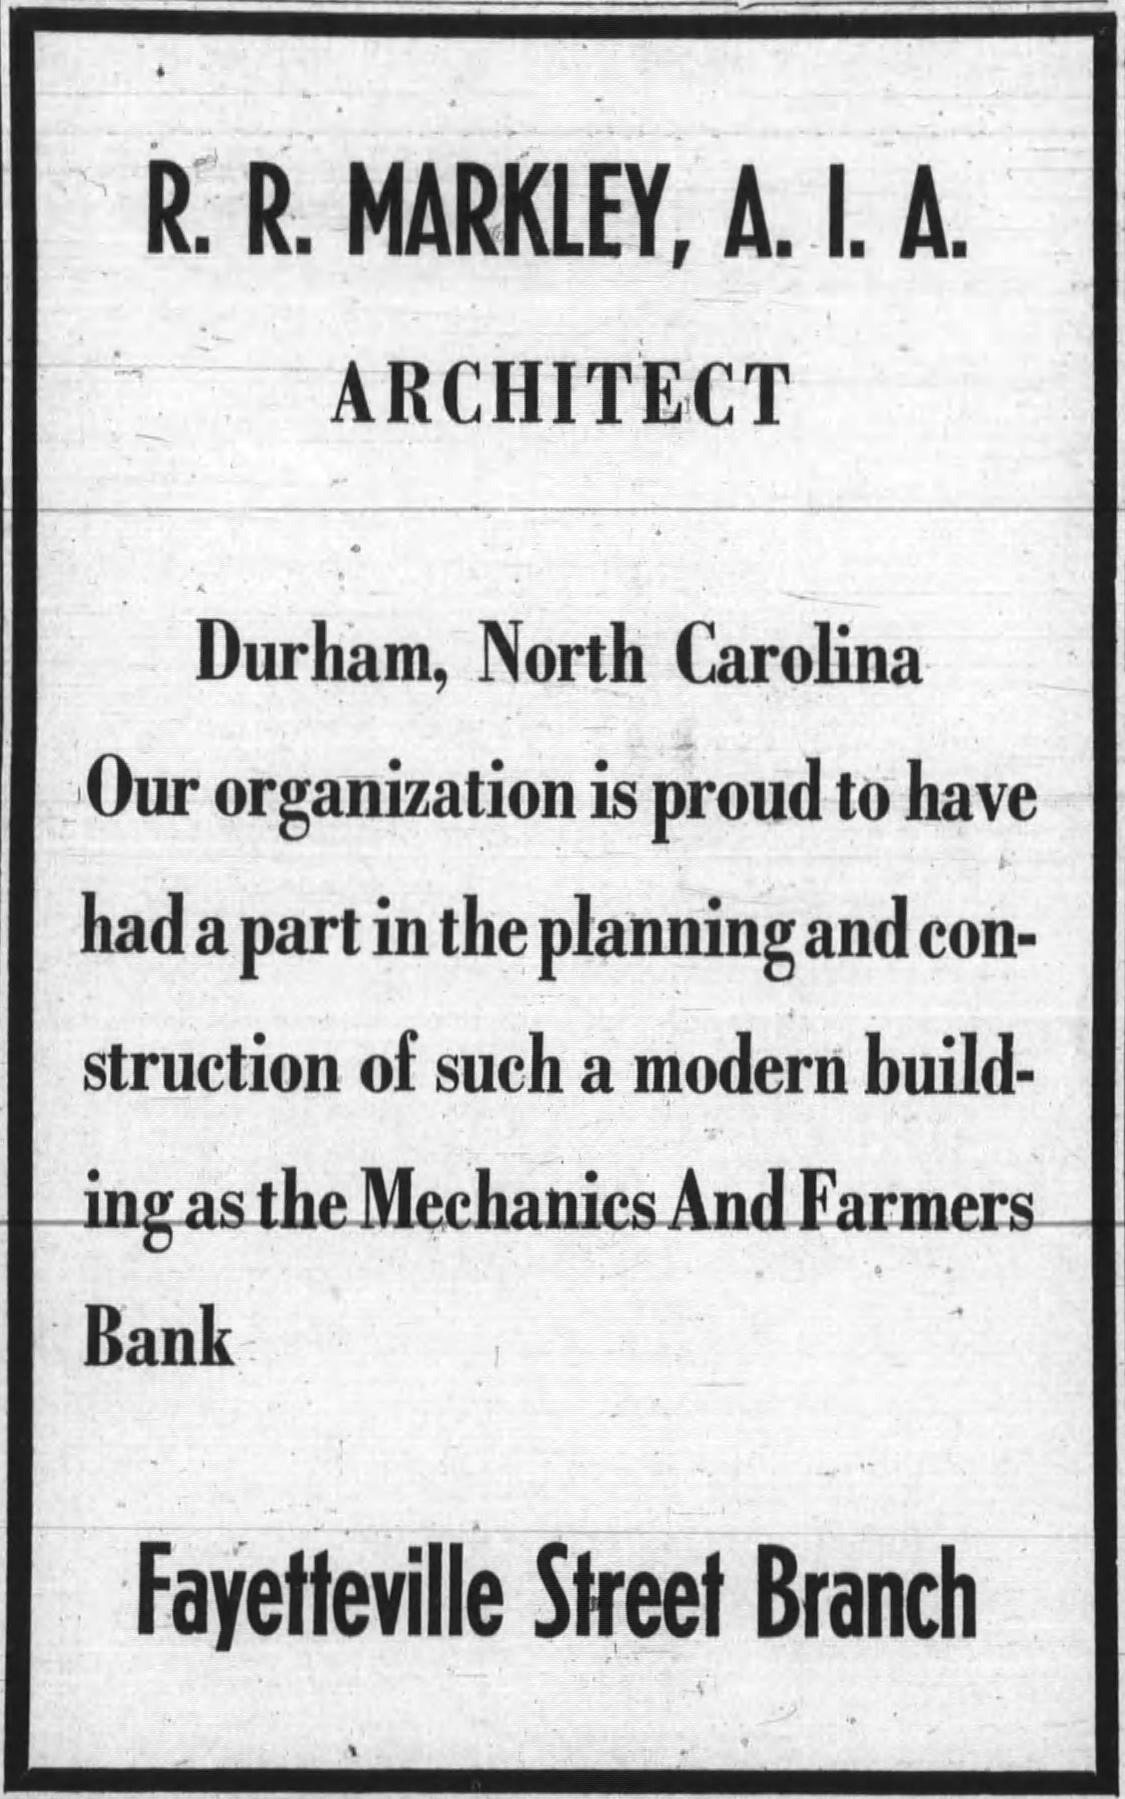 1954 newspaper ad for R. R. Markley, architect.